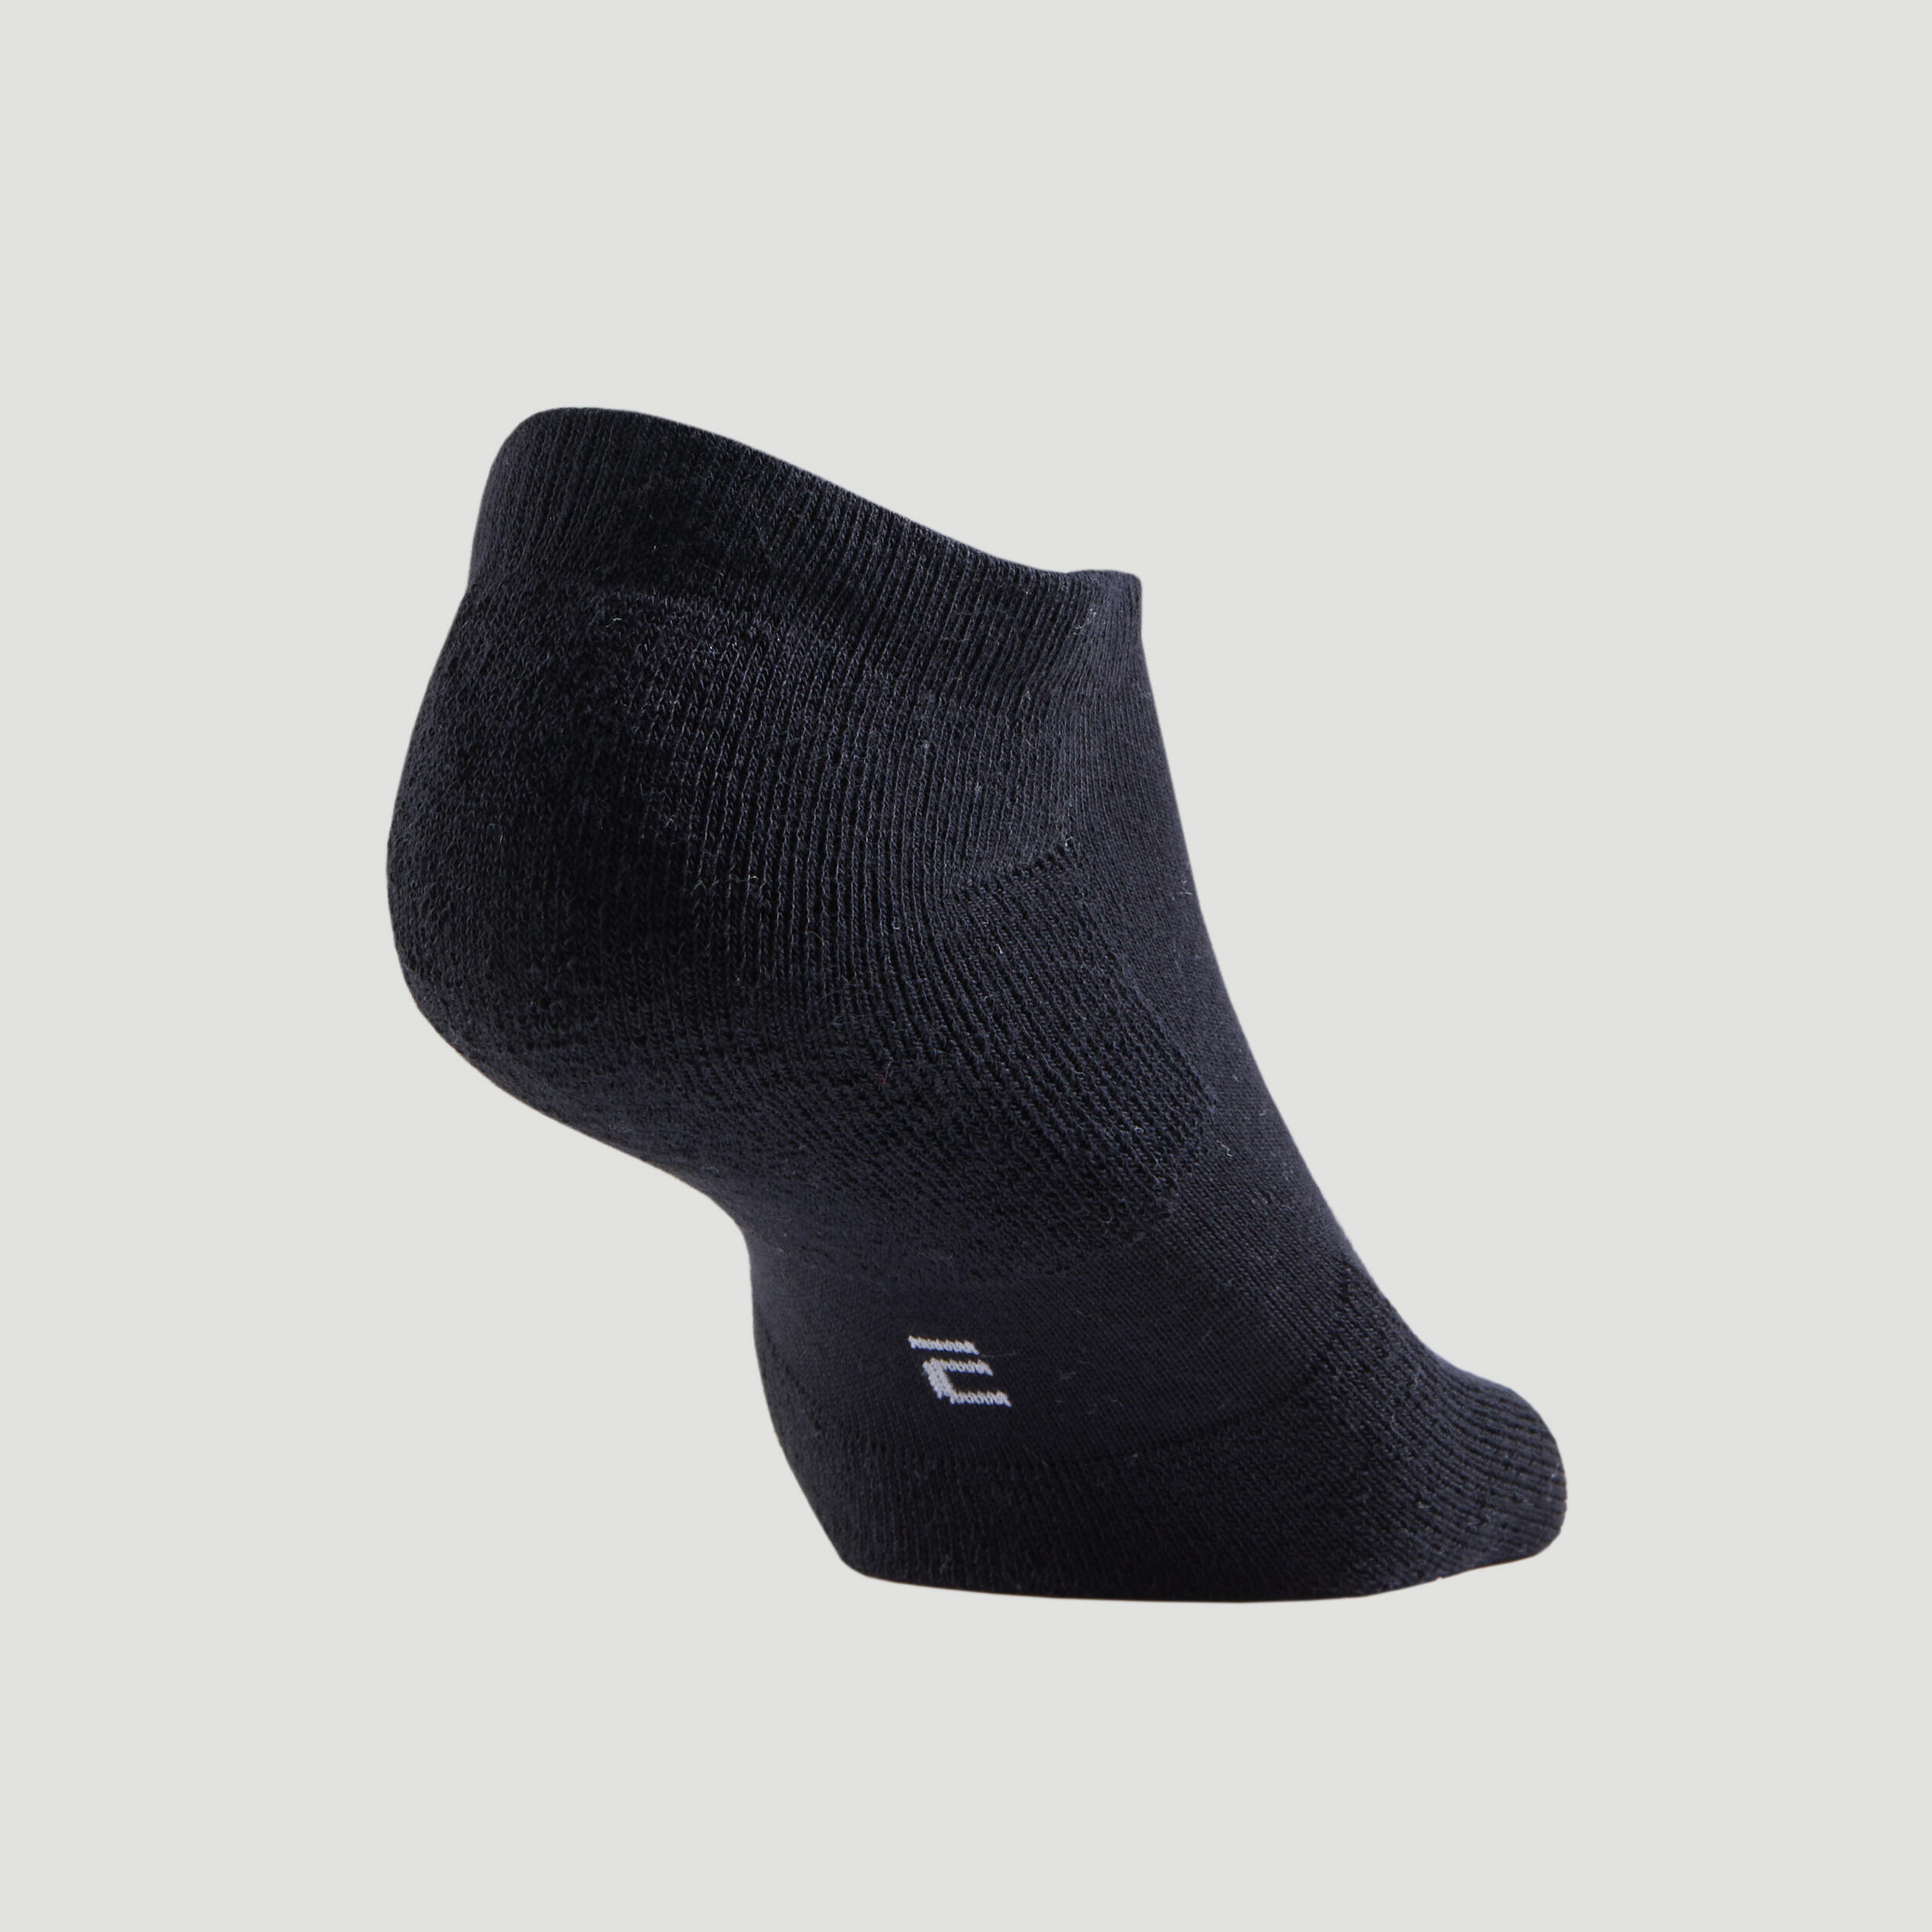 Low Tennis Socks RS 100 Tri-Pack - Black 4/5